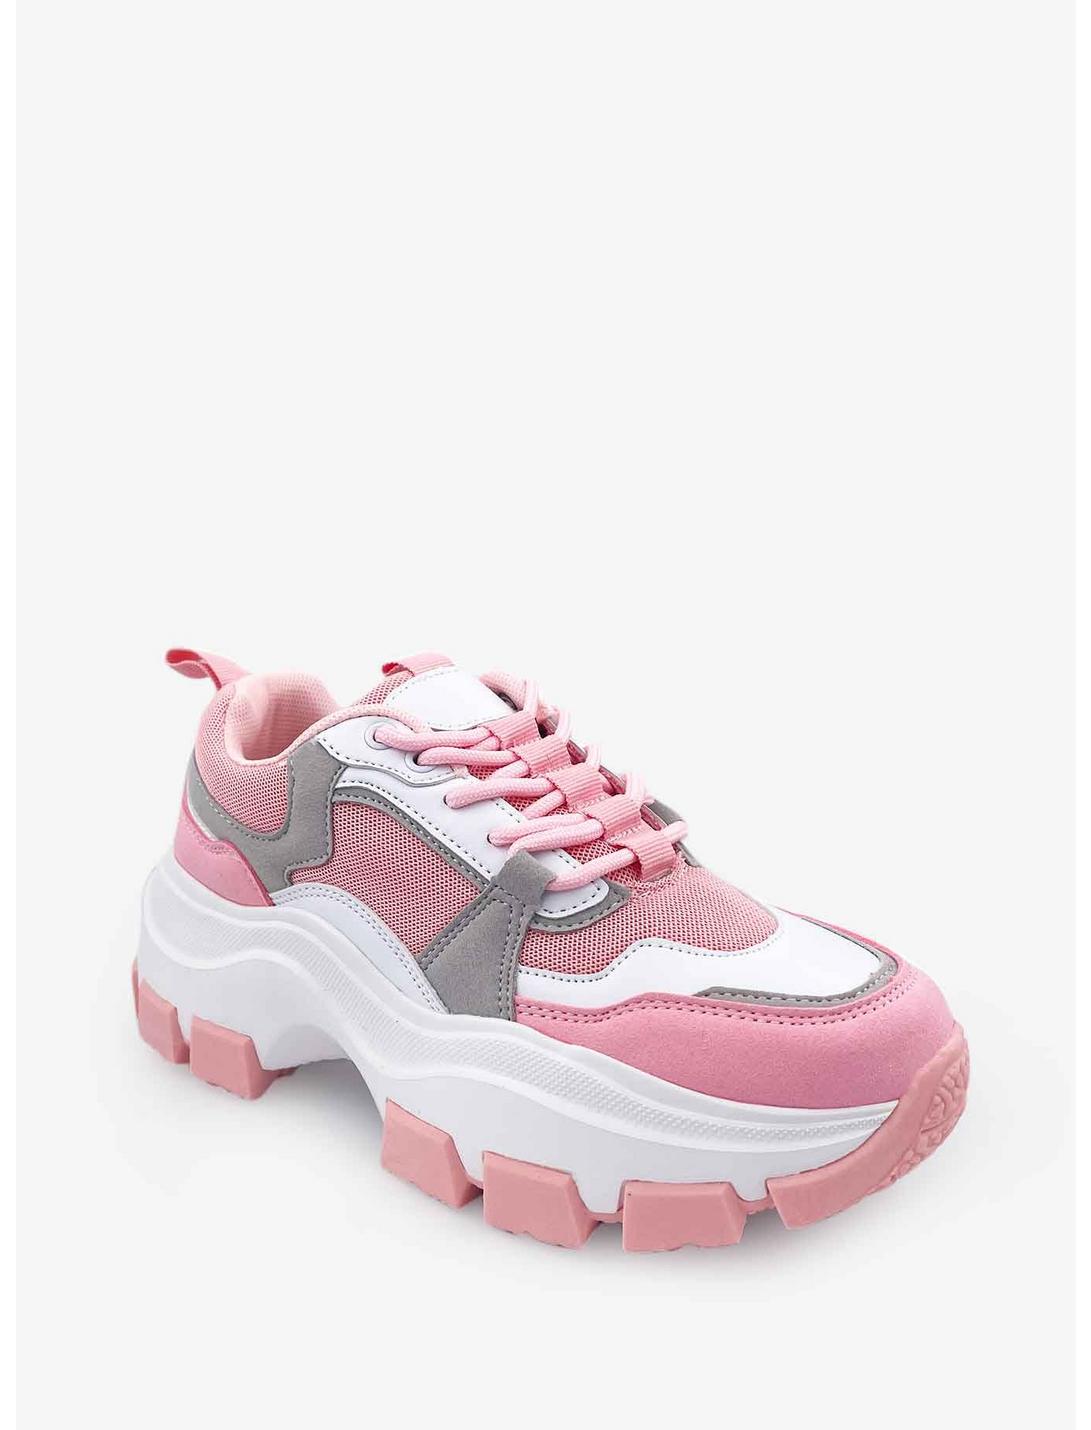 Damian Chunky Bottom Sneaker Pink, PINK, hi-res